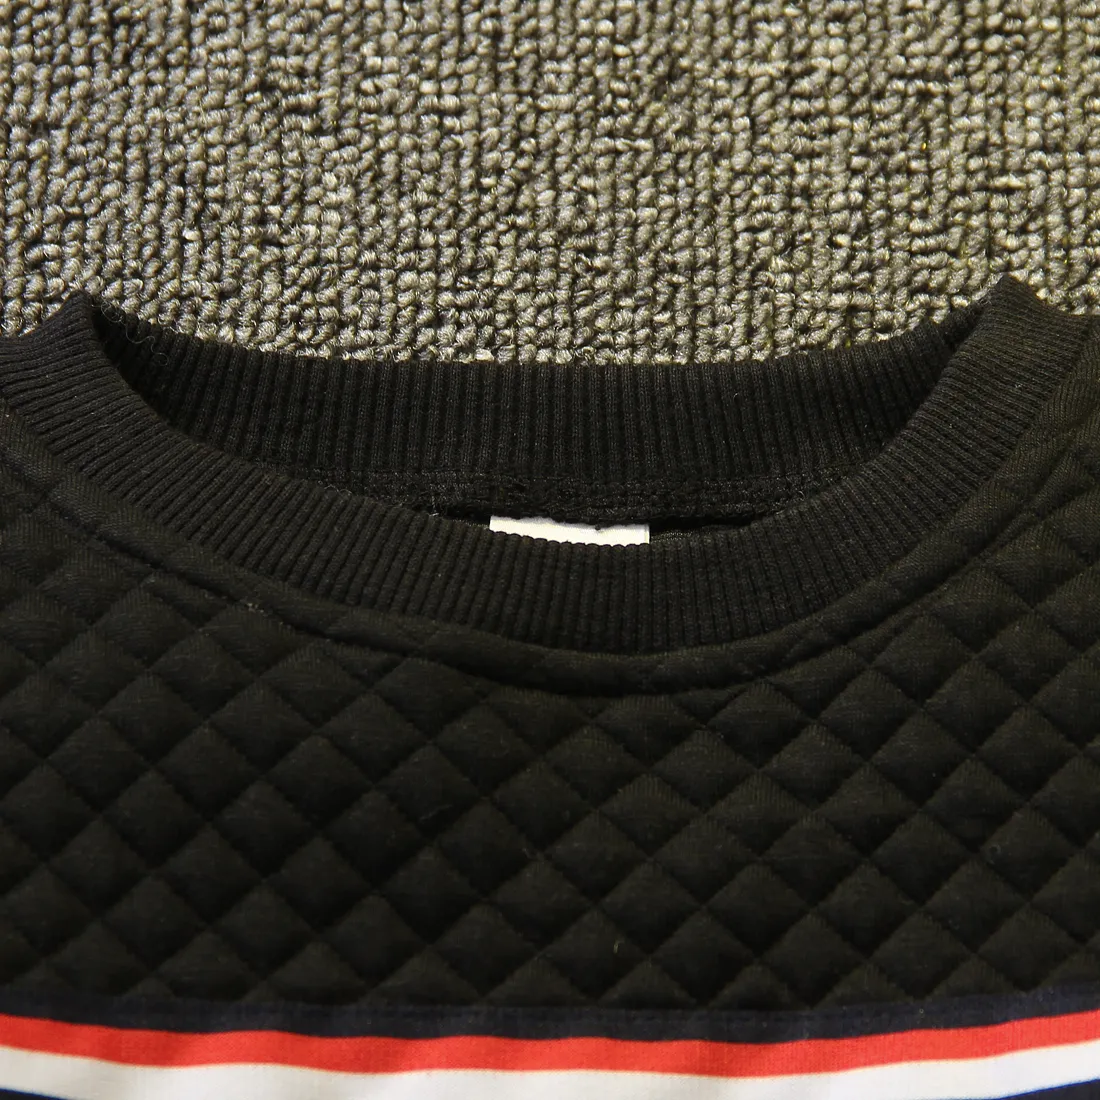 Kid Boy Preppy style Striped Webbing Textured Pullover Sweatshirt Black big image 1